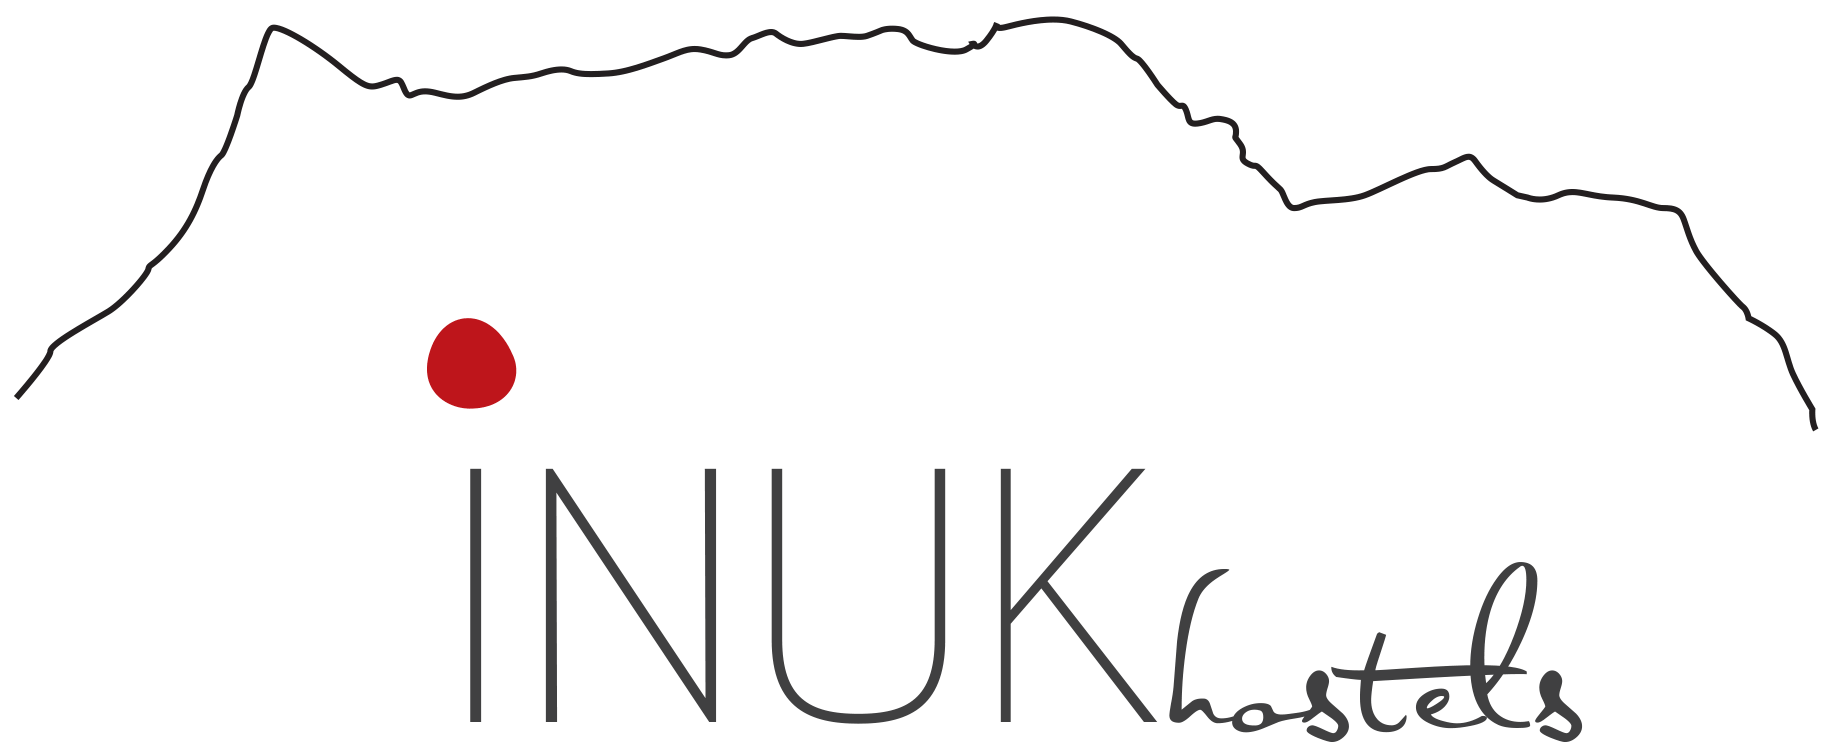 Inuk Travel